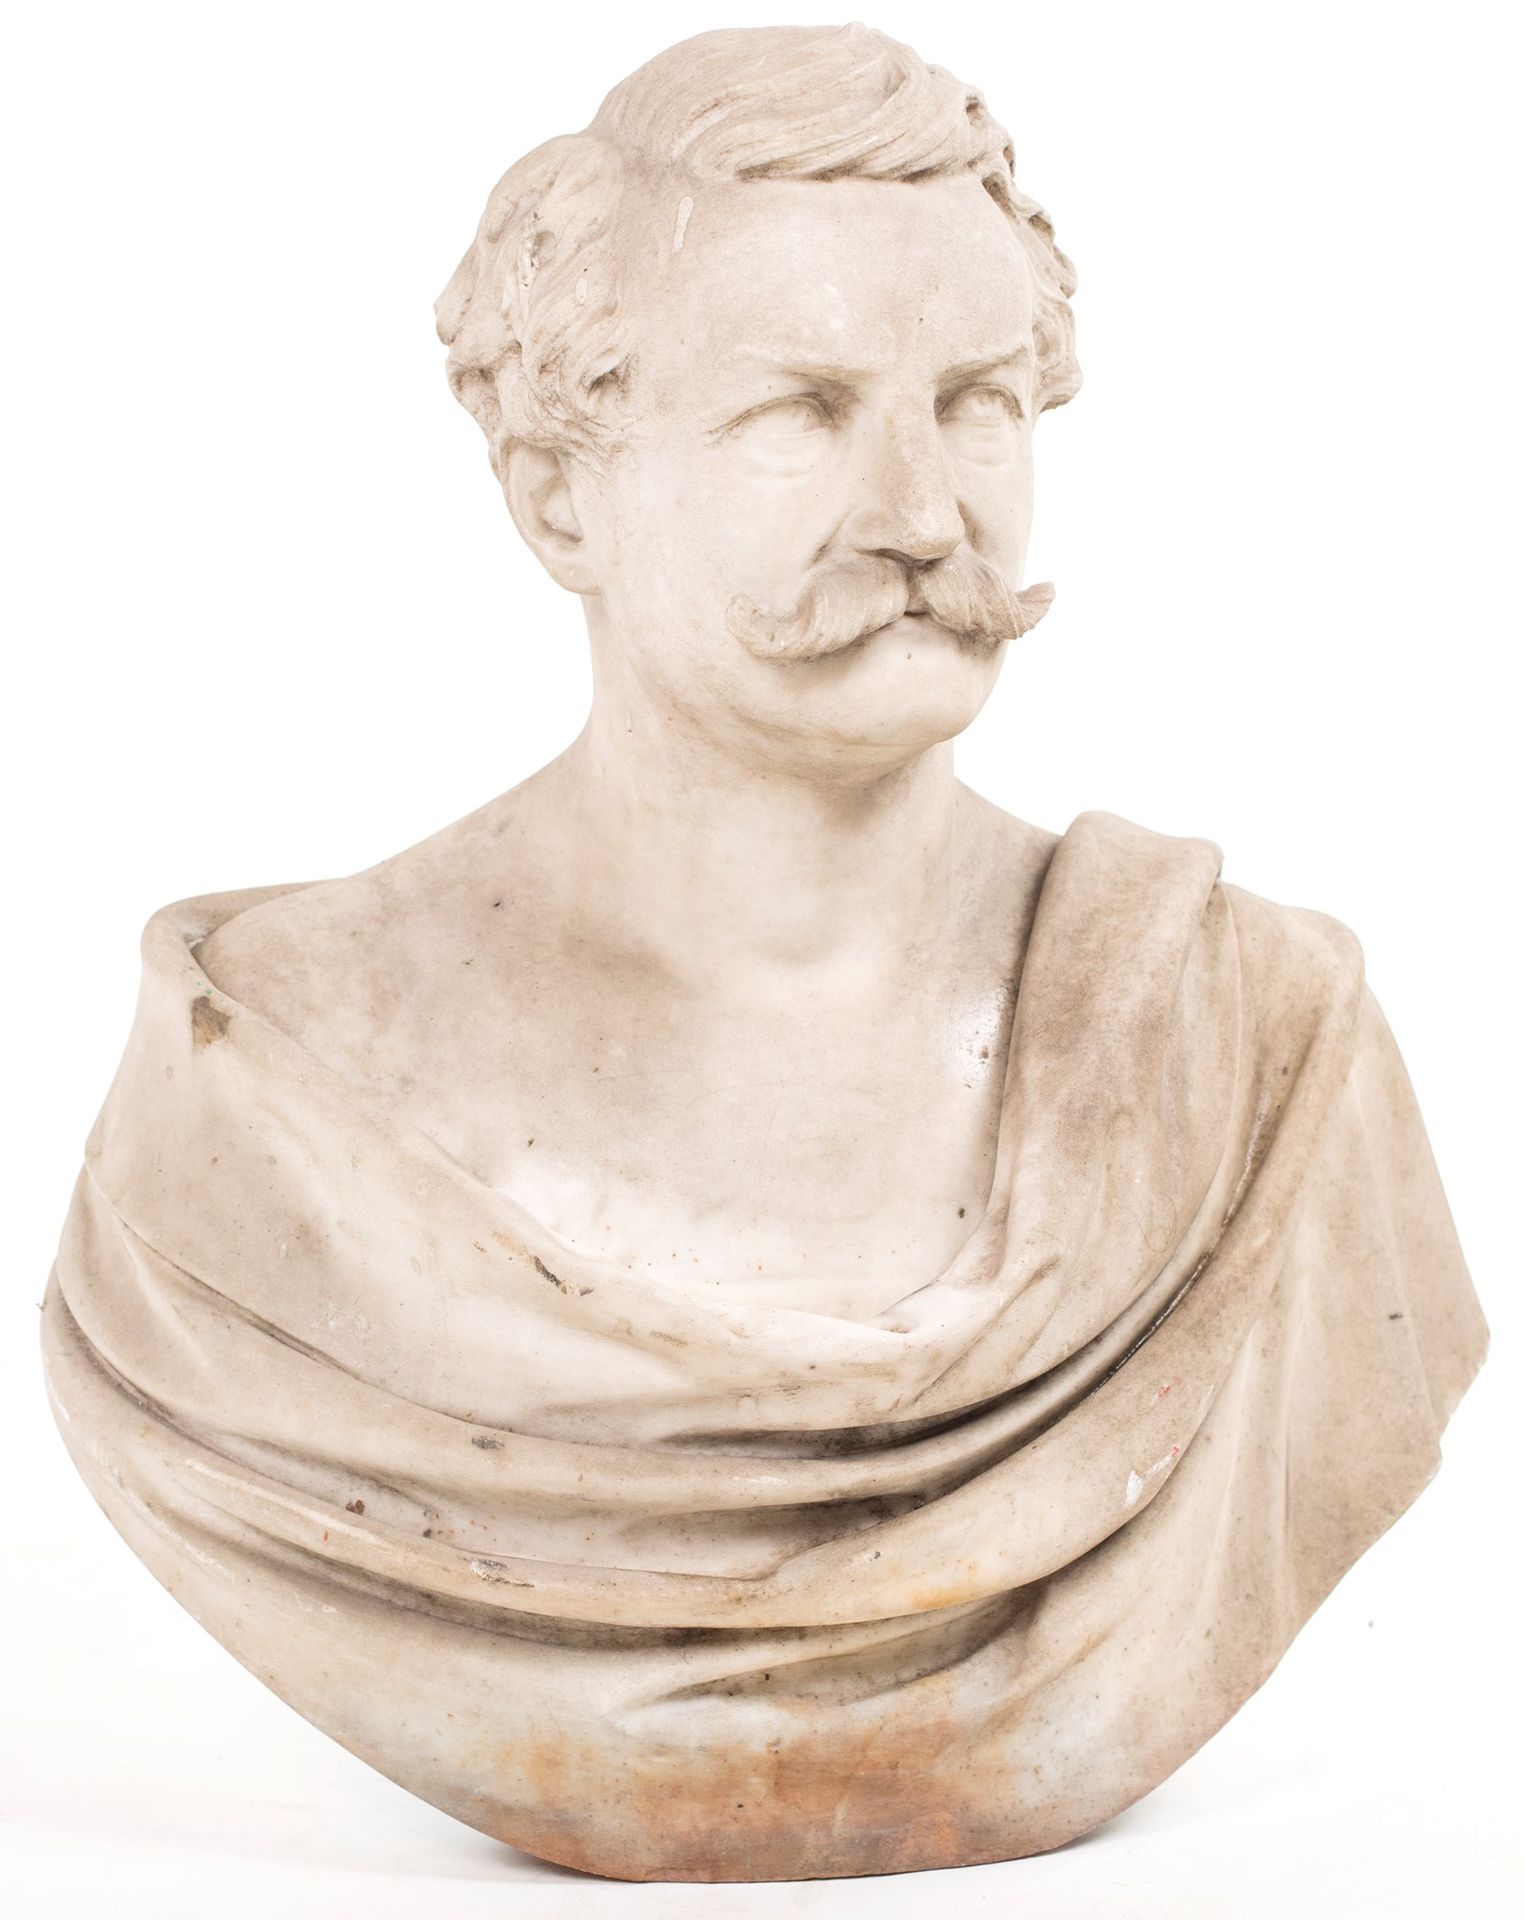 White marble bust, 19th century 描绘了一个有胡子的长袍绅士的形象